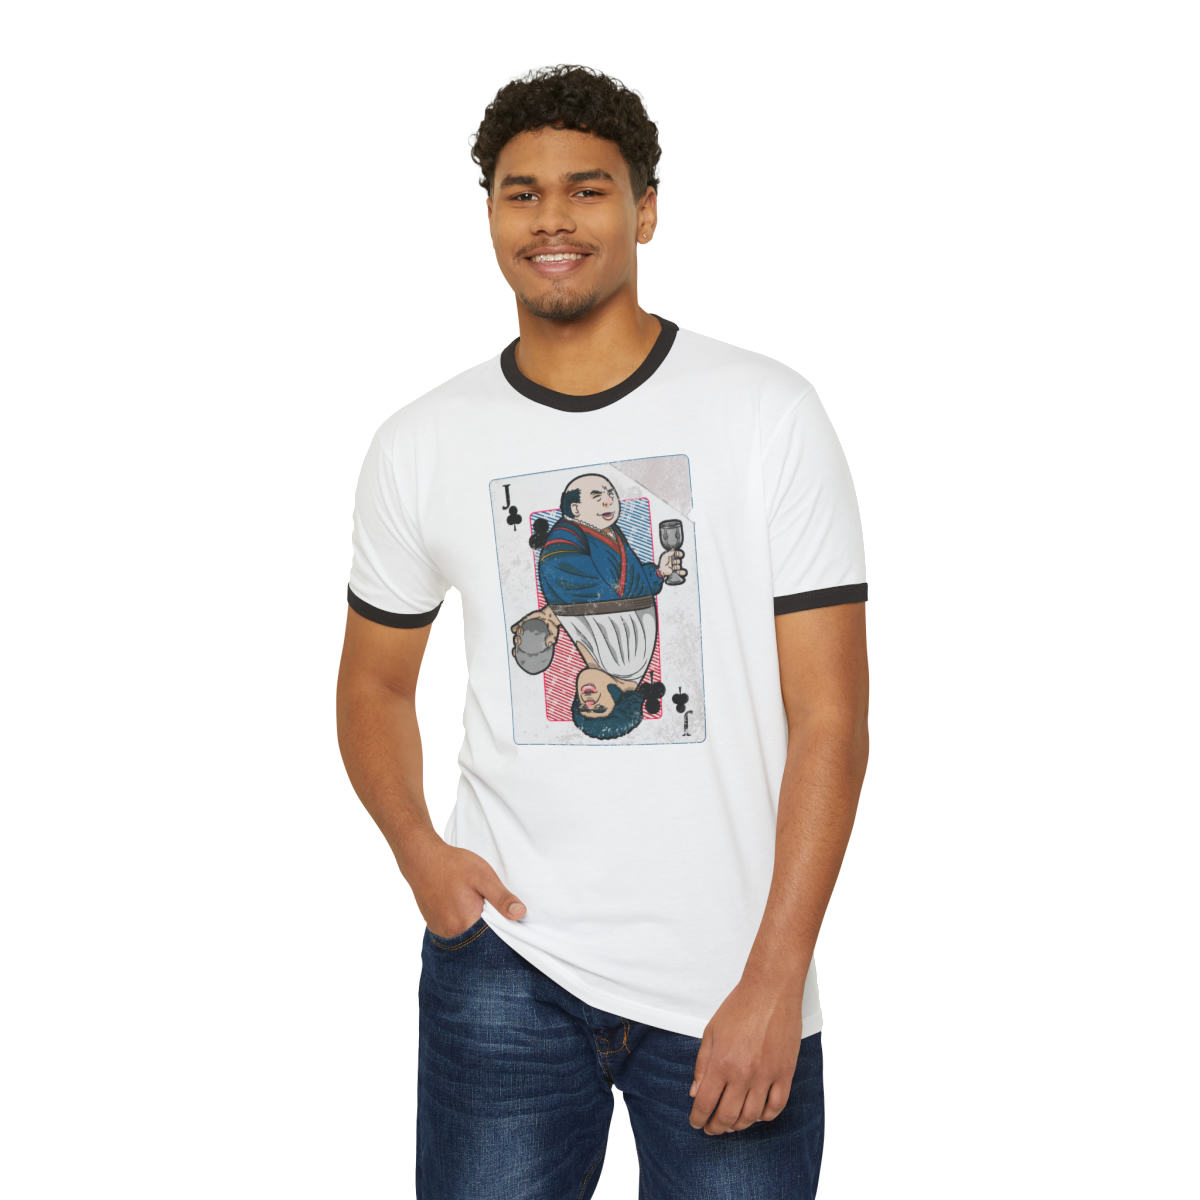 Jack of Clubs - Unisex Cotton Ringer T-Shirt